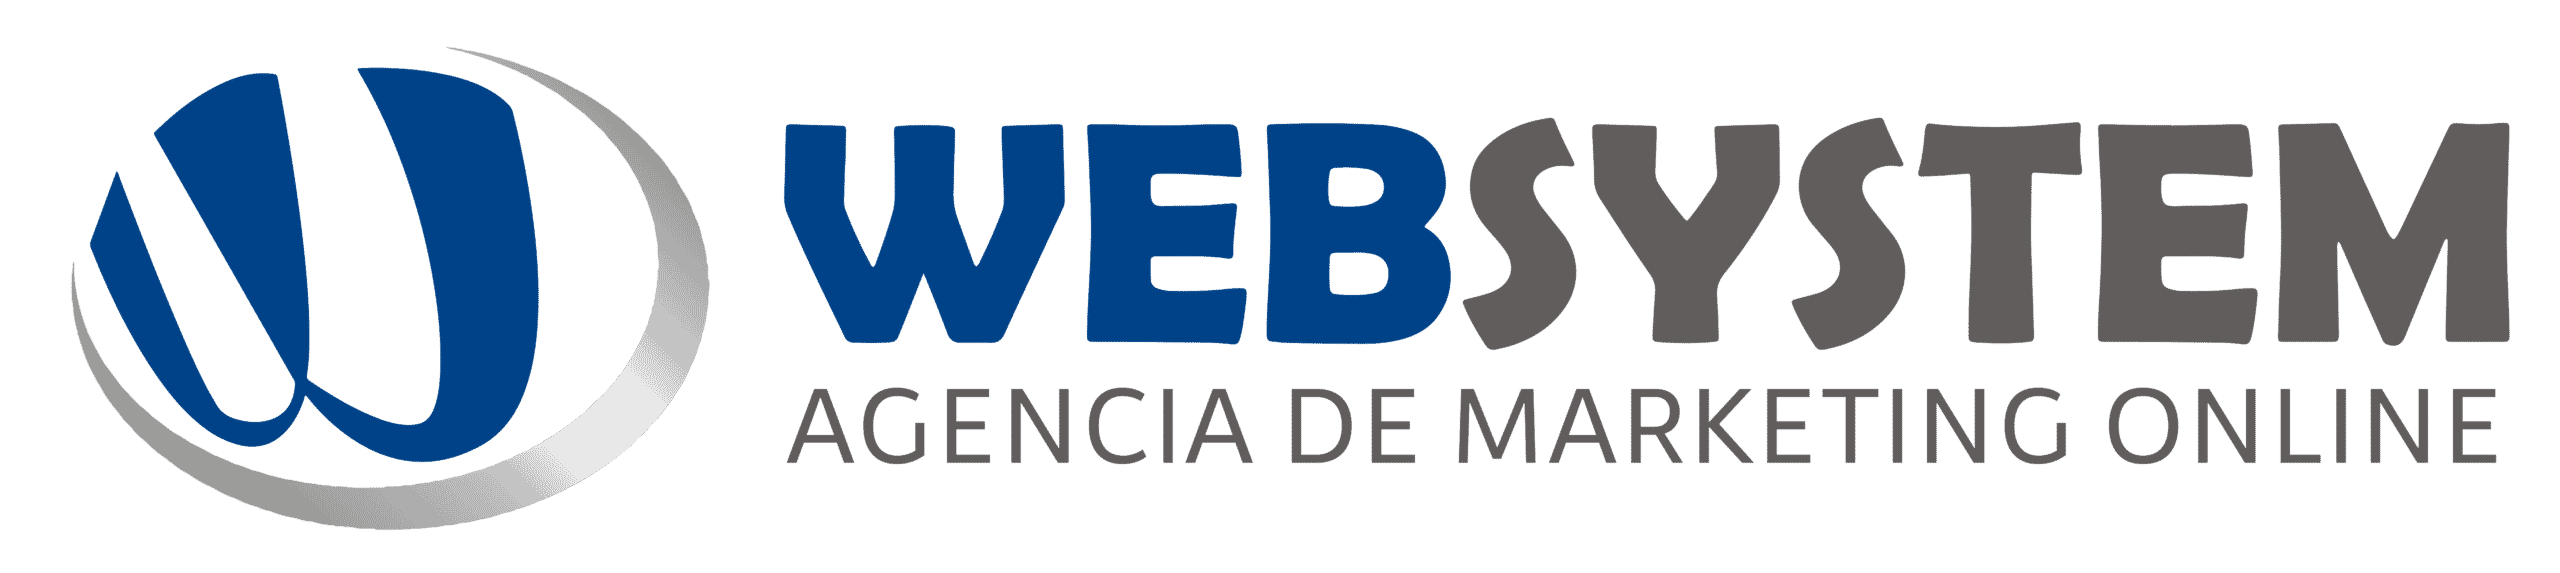 Websystem Agencia de Marketing